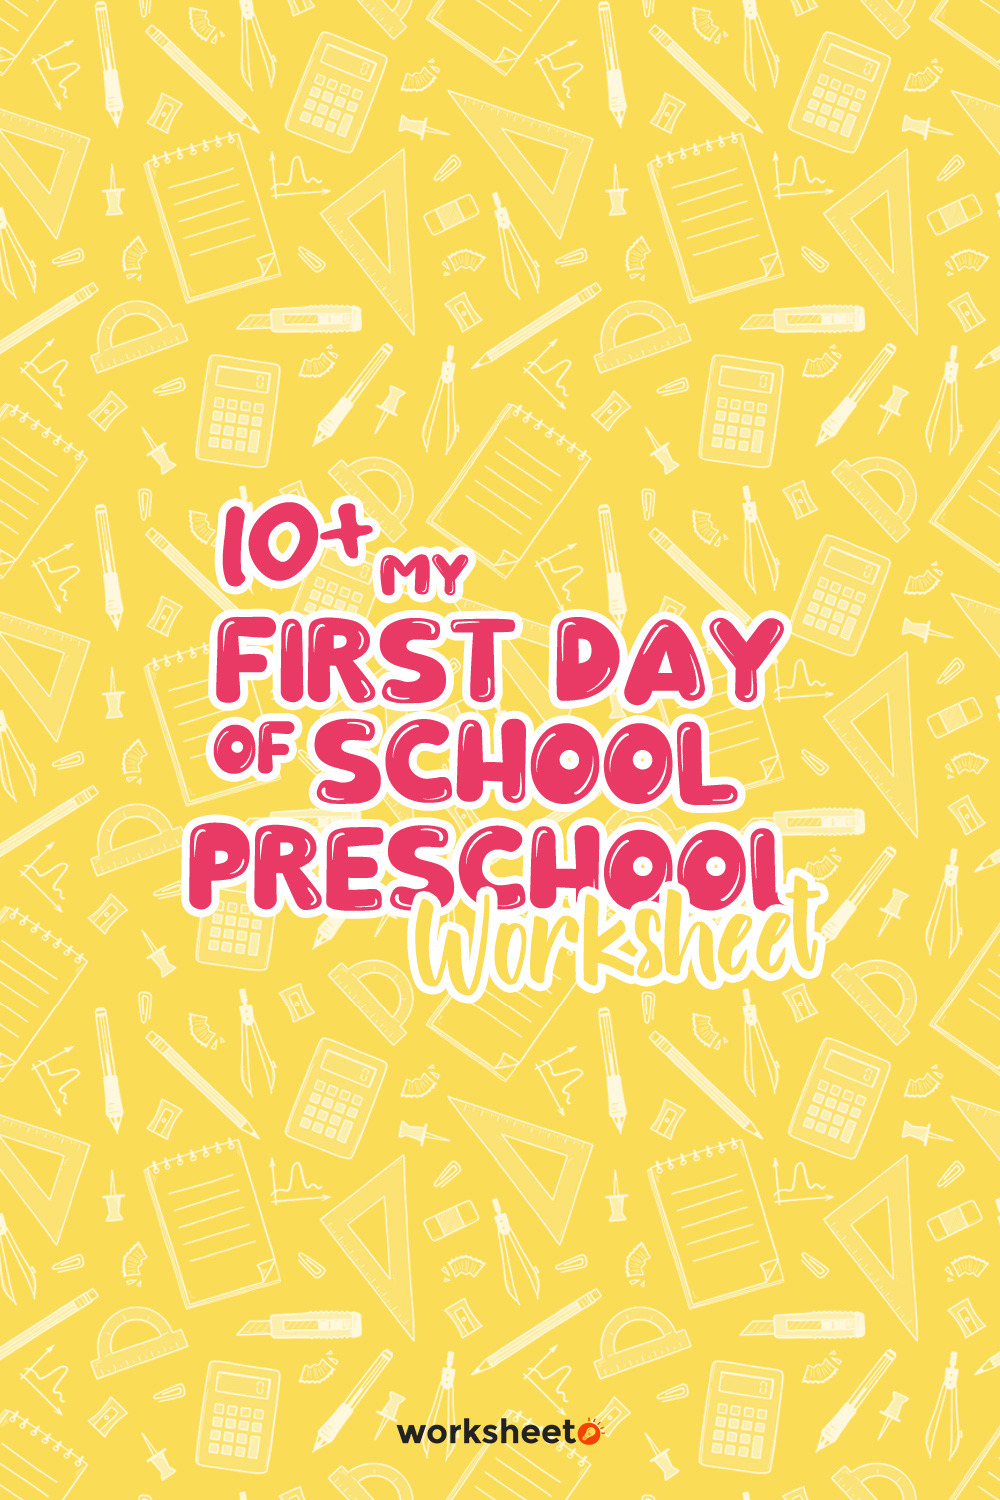 My First Day of School Preschool Worksheet